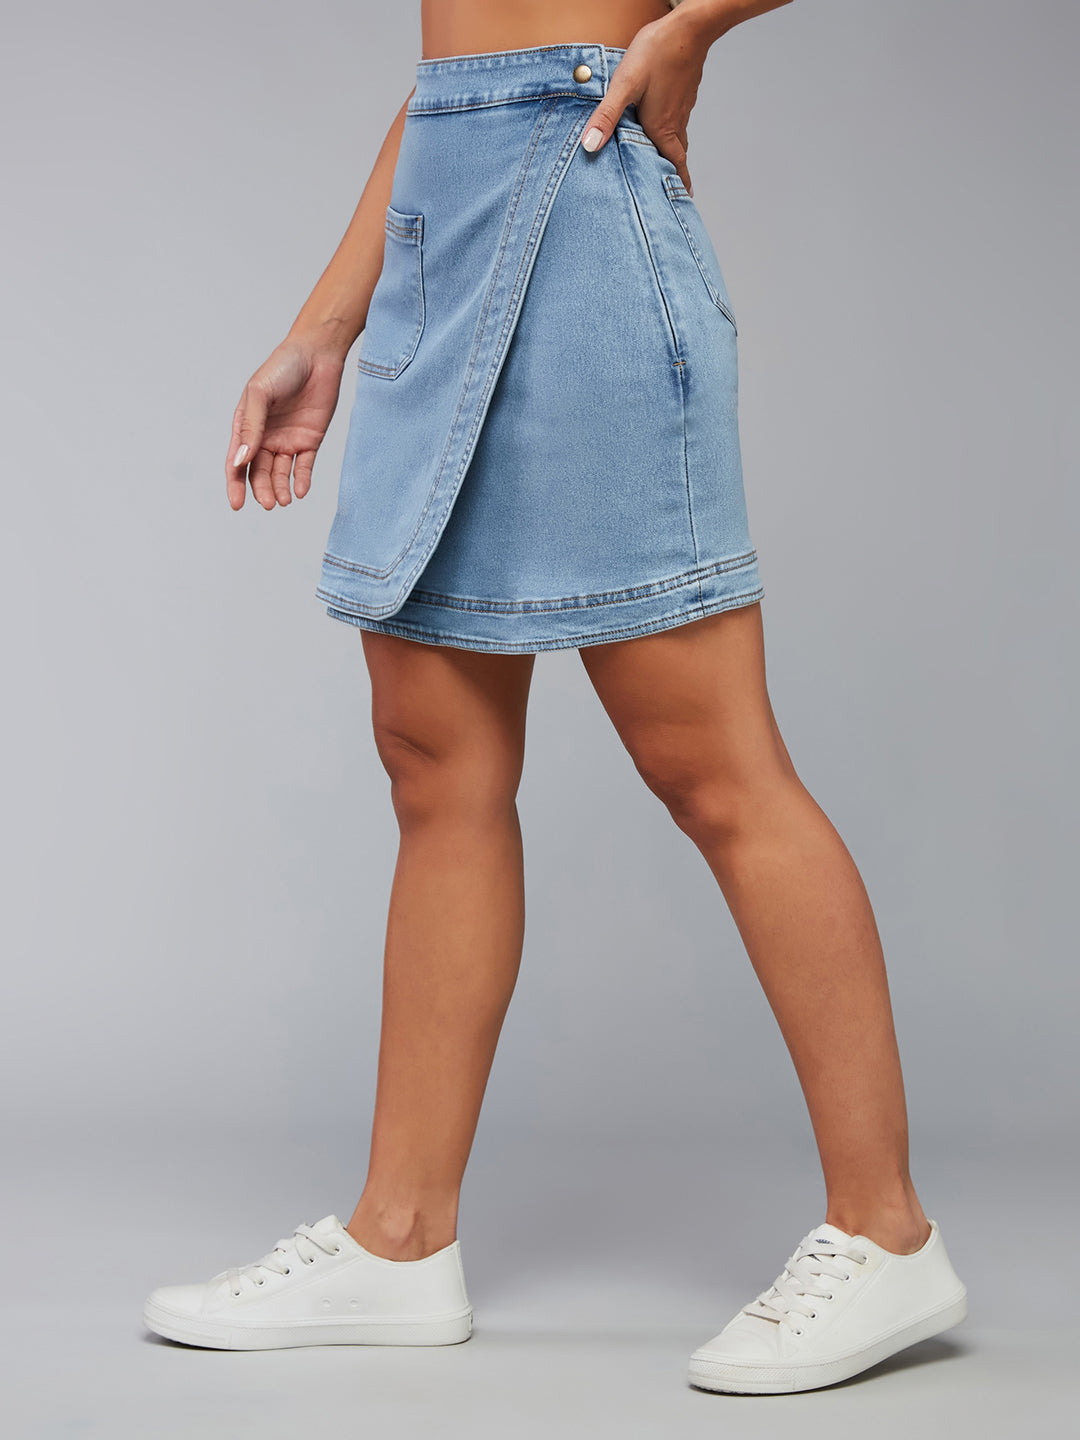 Women's Light Blue Regular High rise Clean look Above Knee Stretchable Denim Skirt